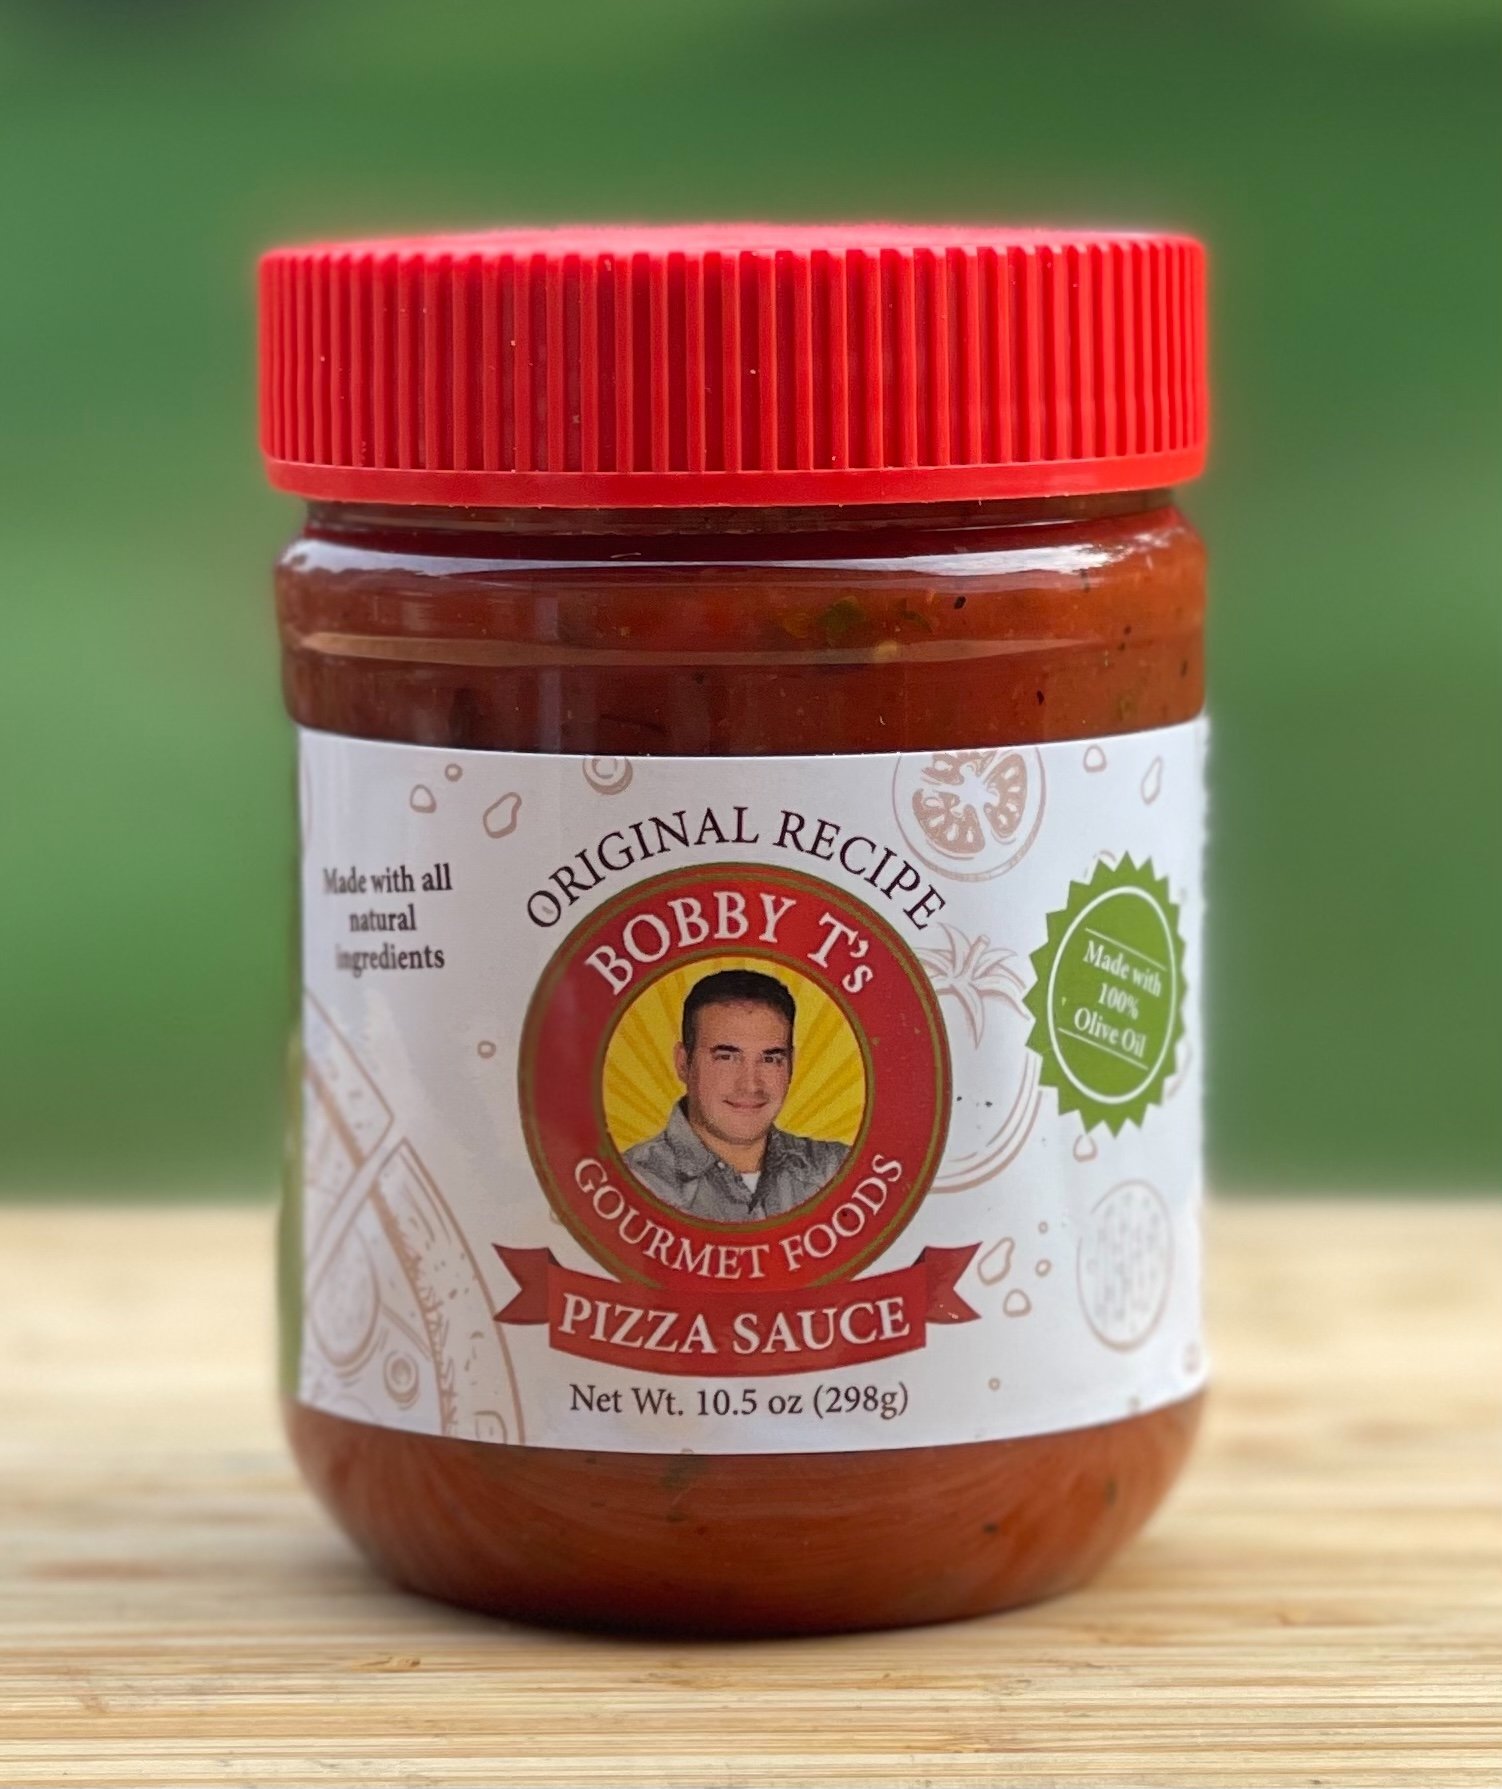 Bobby T's Gourmet Foods Original Recipe Pizza Sauce